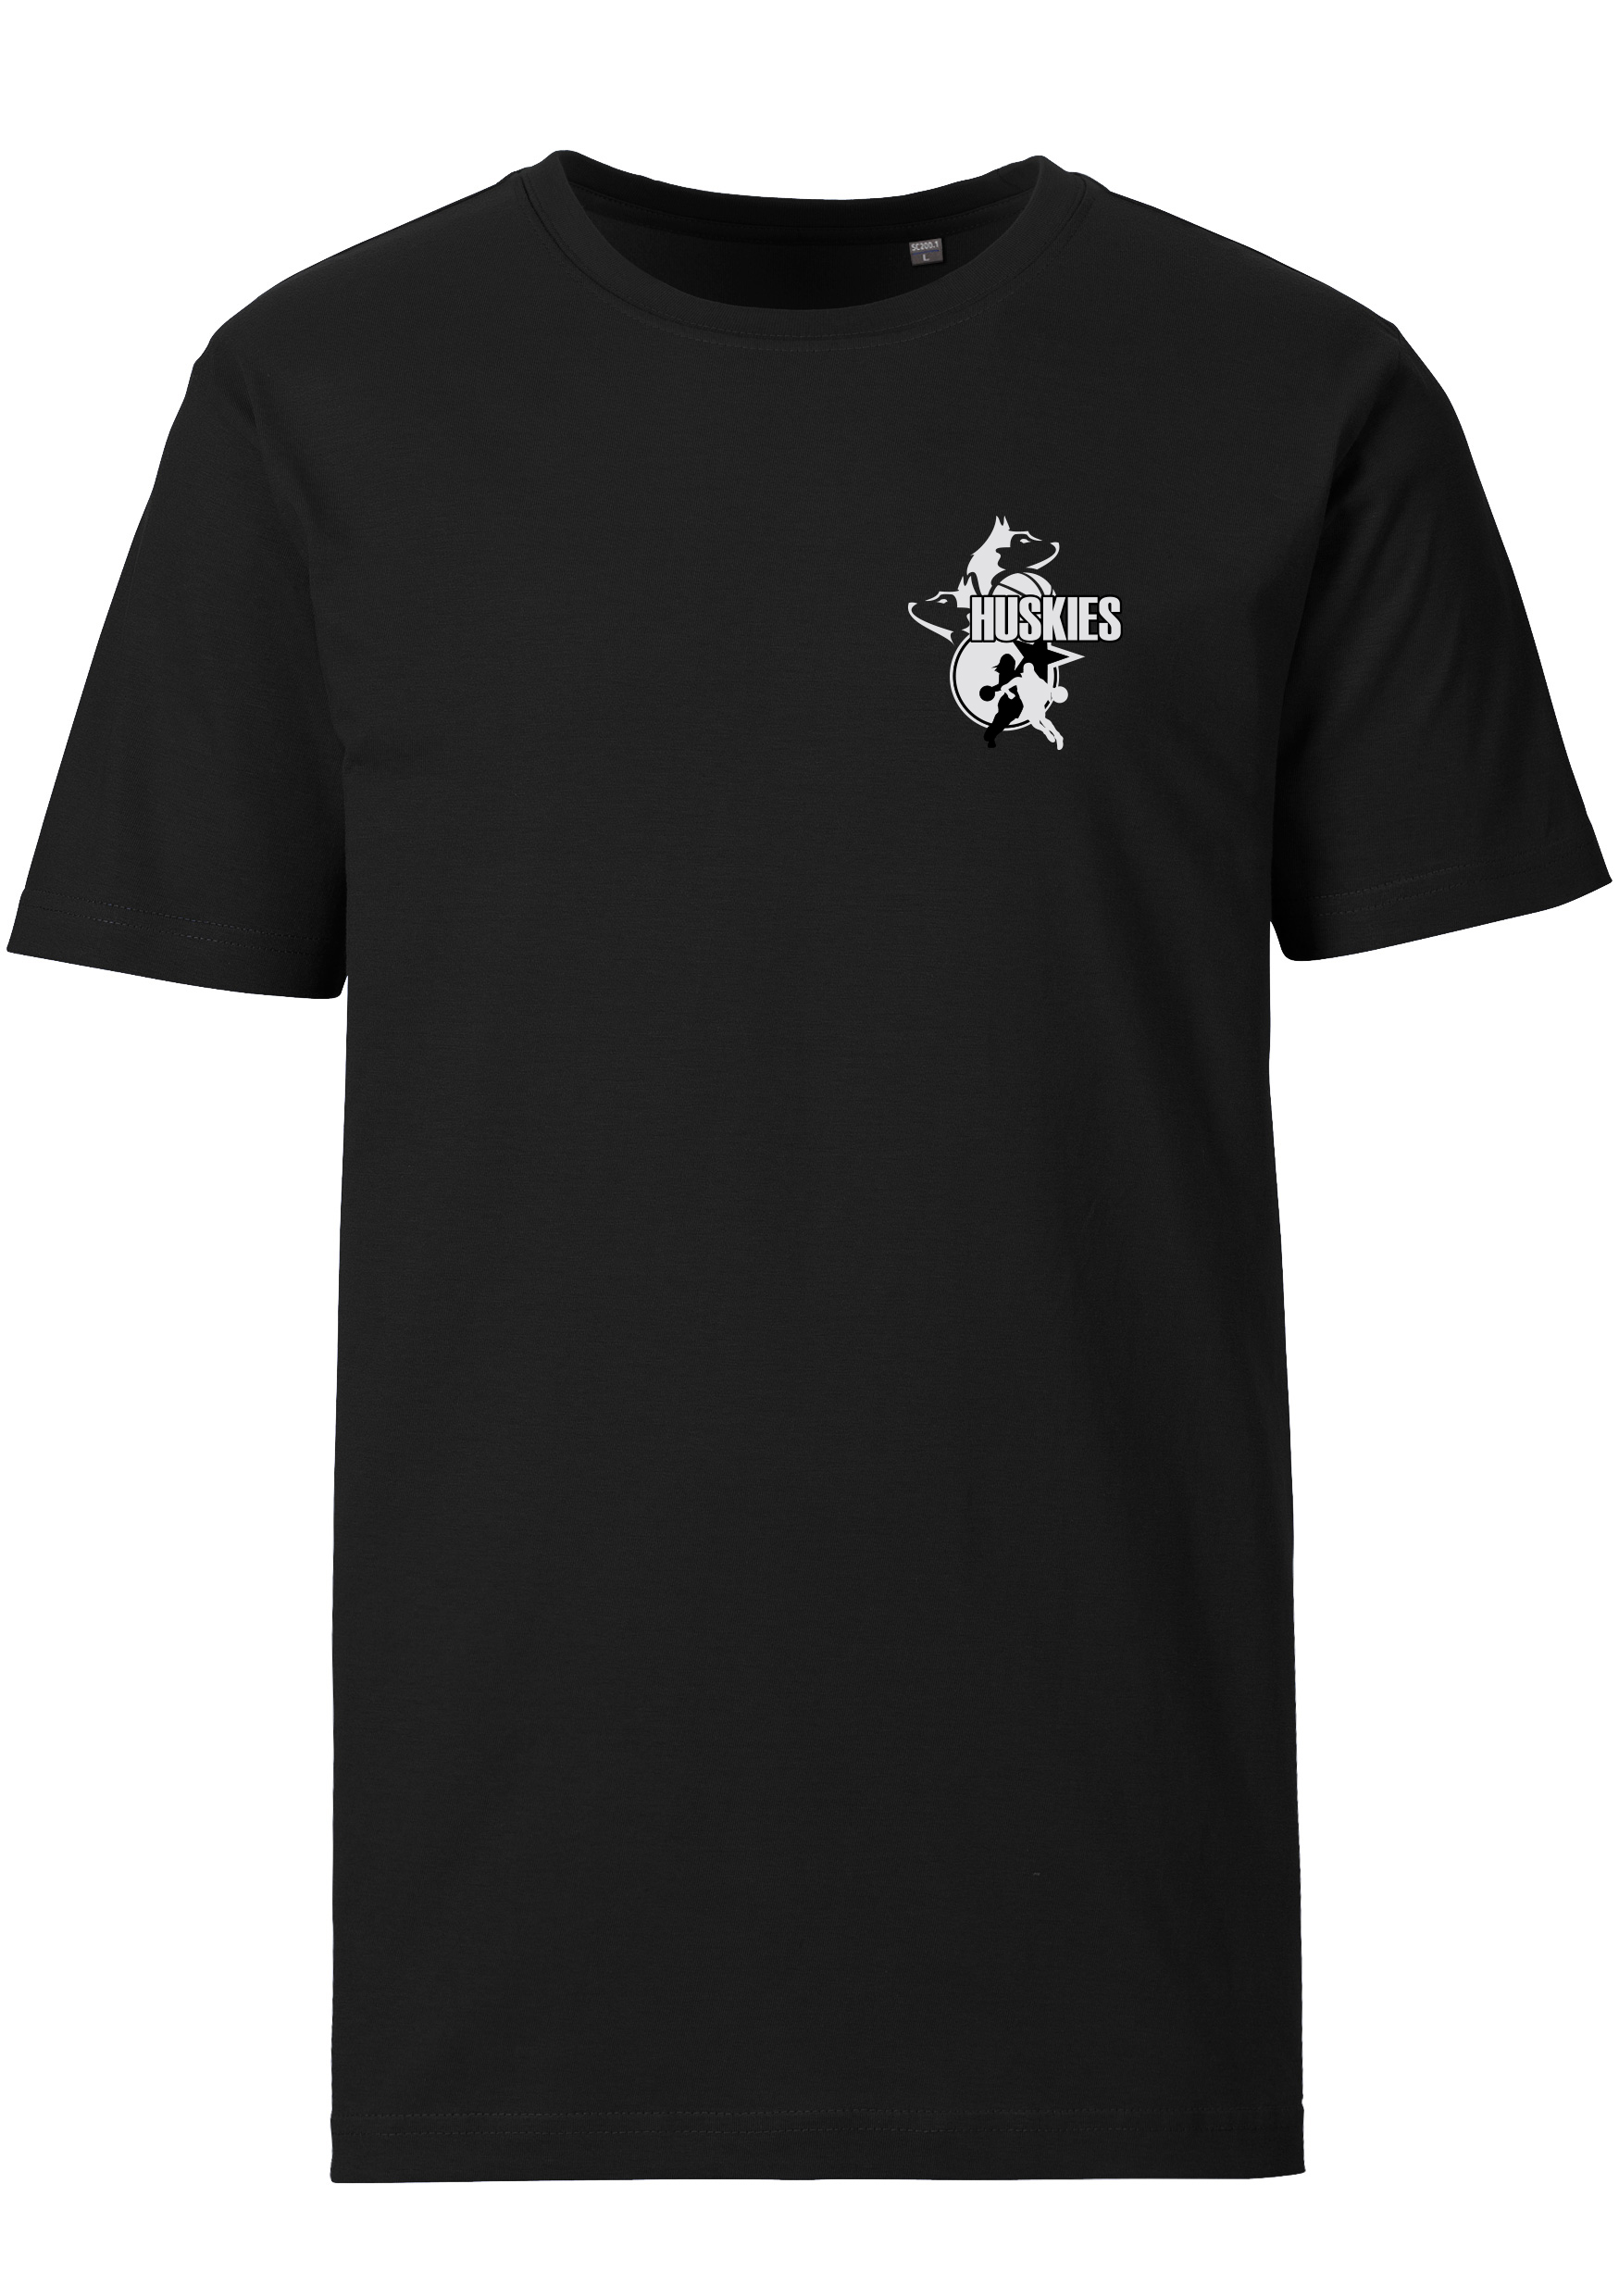 Huskies T-Shirt Logo klein schwarz